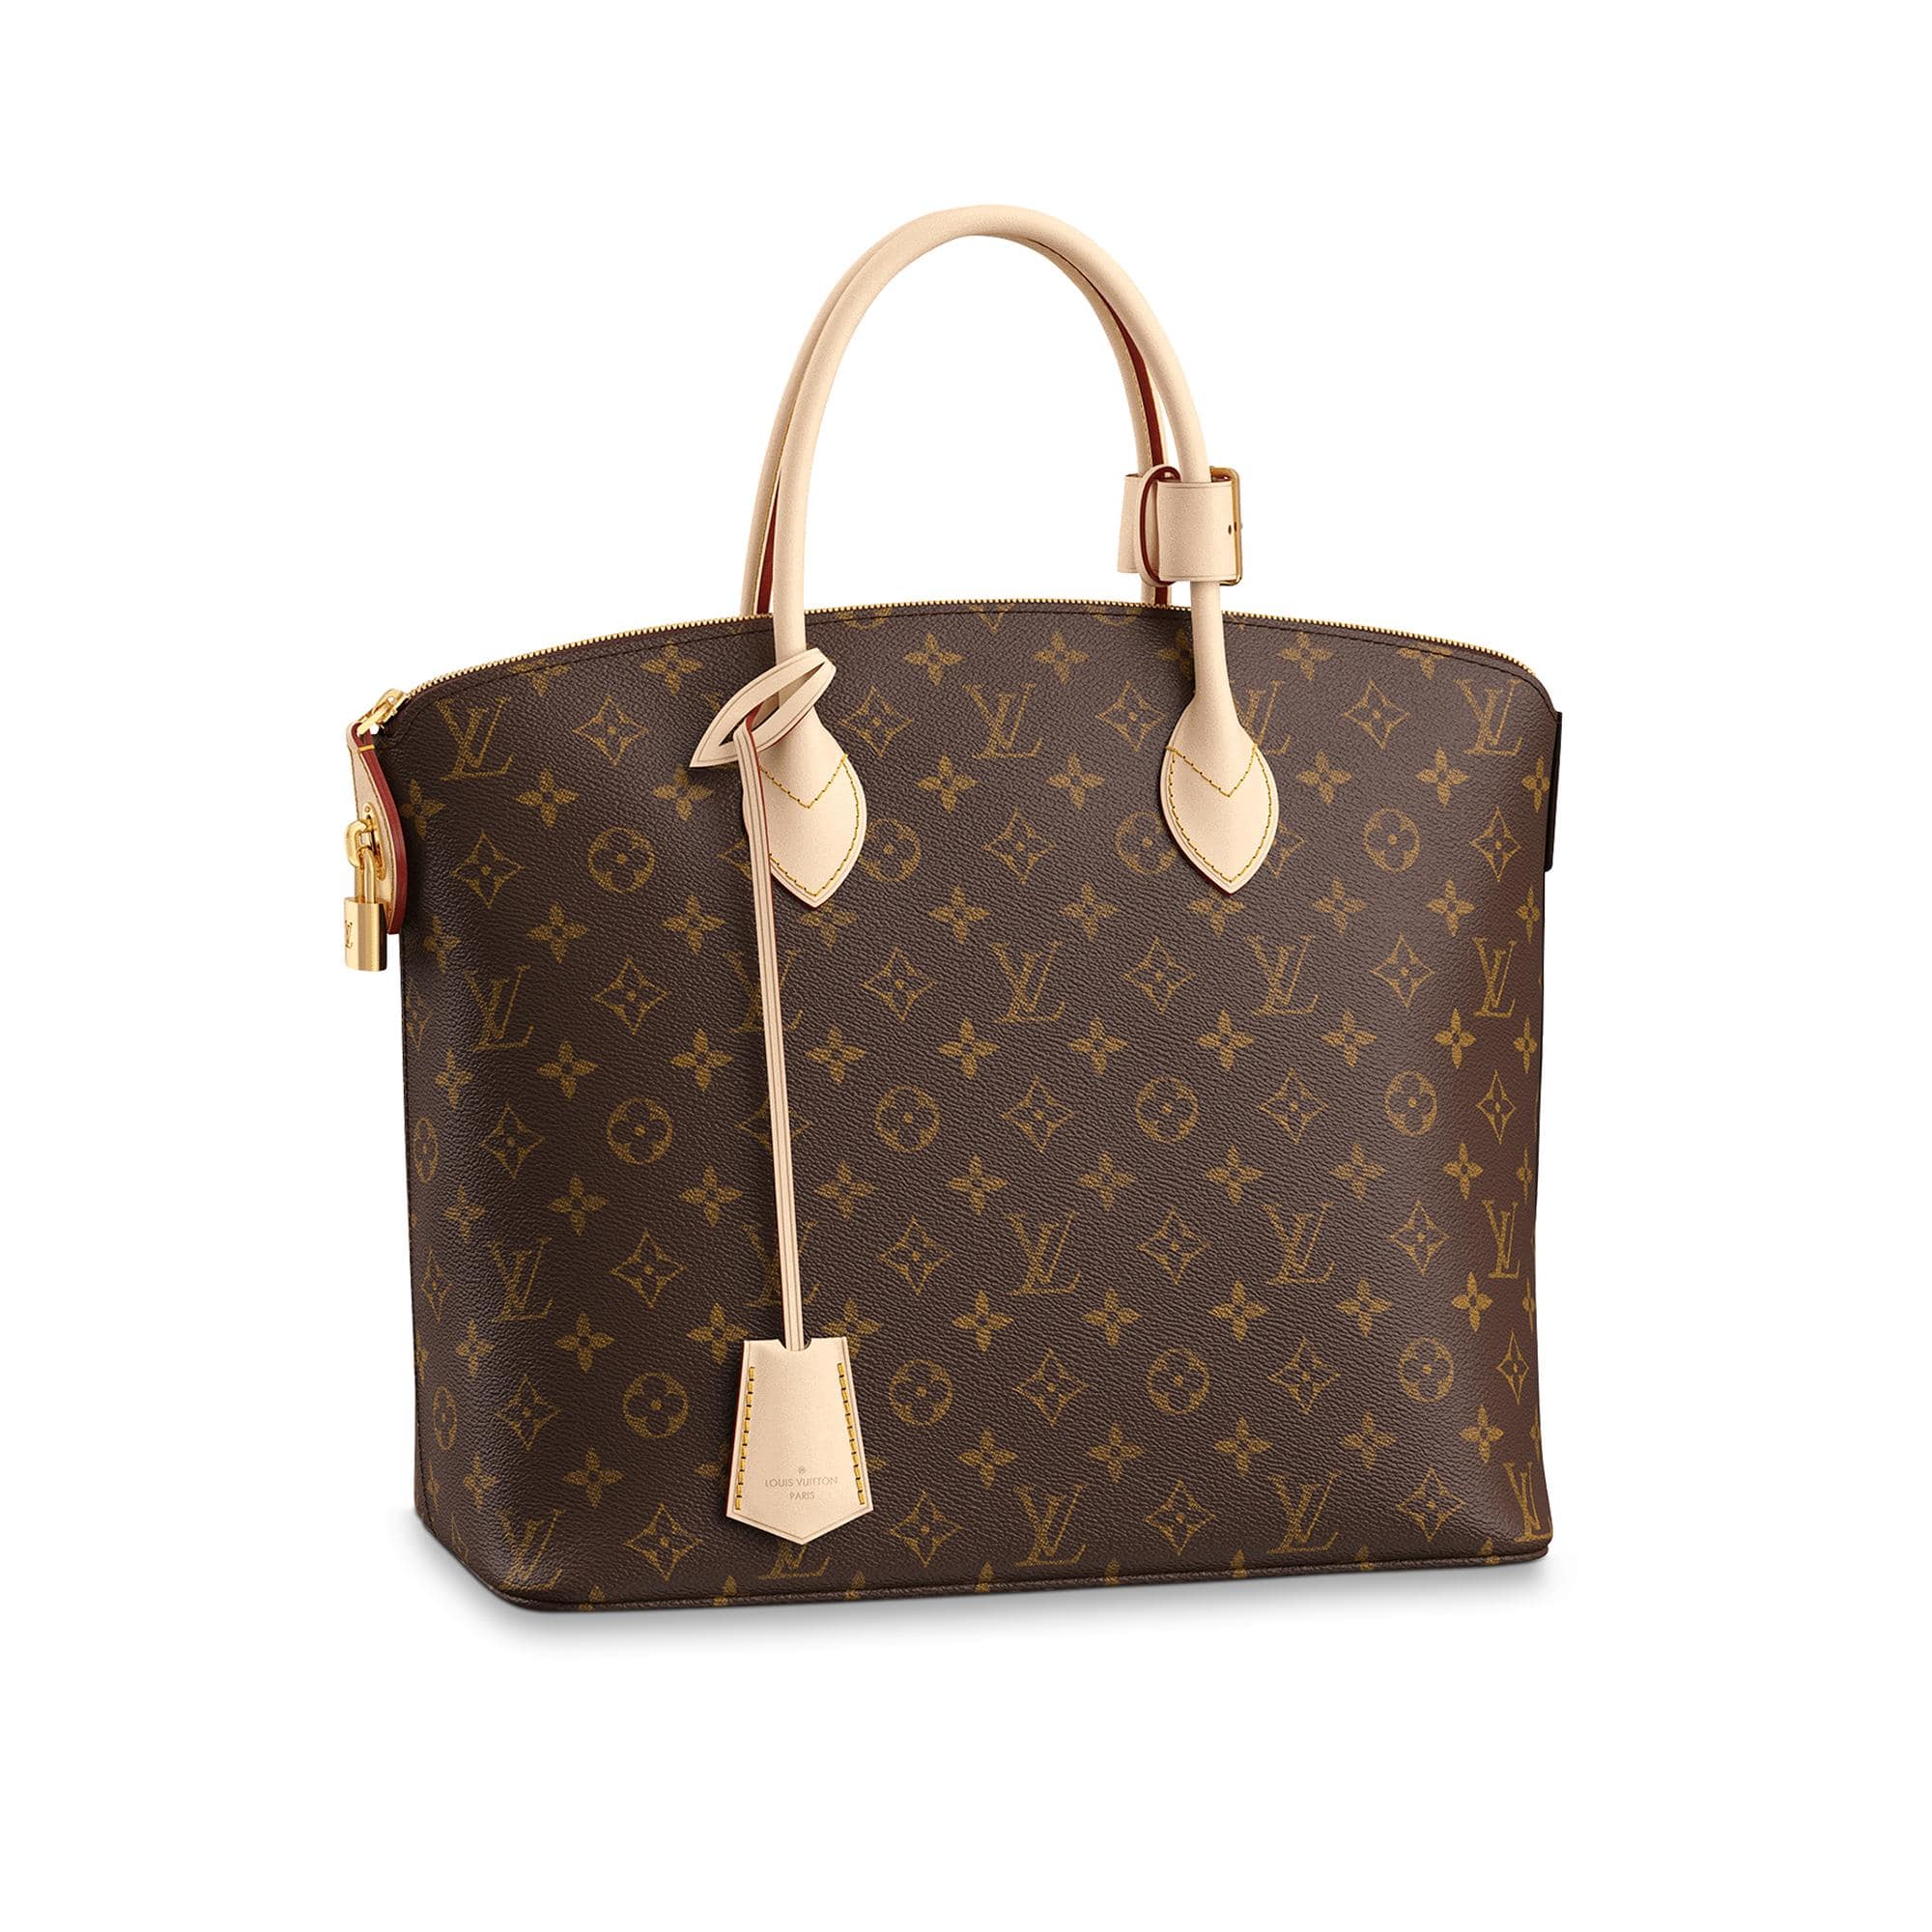 Top 10 Most Popular Louis  Vuitton  Bags 